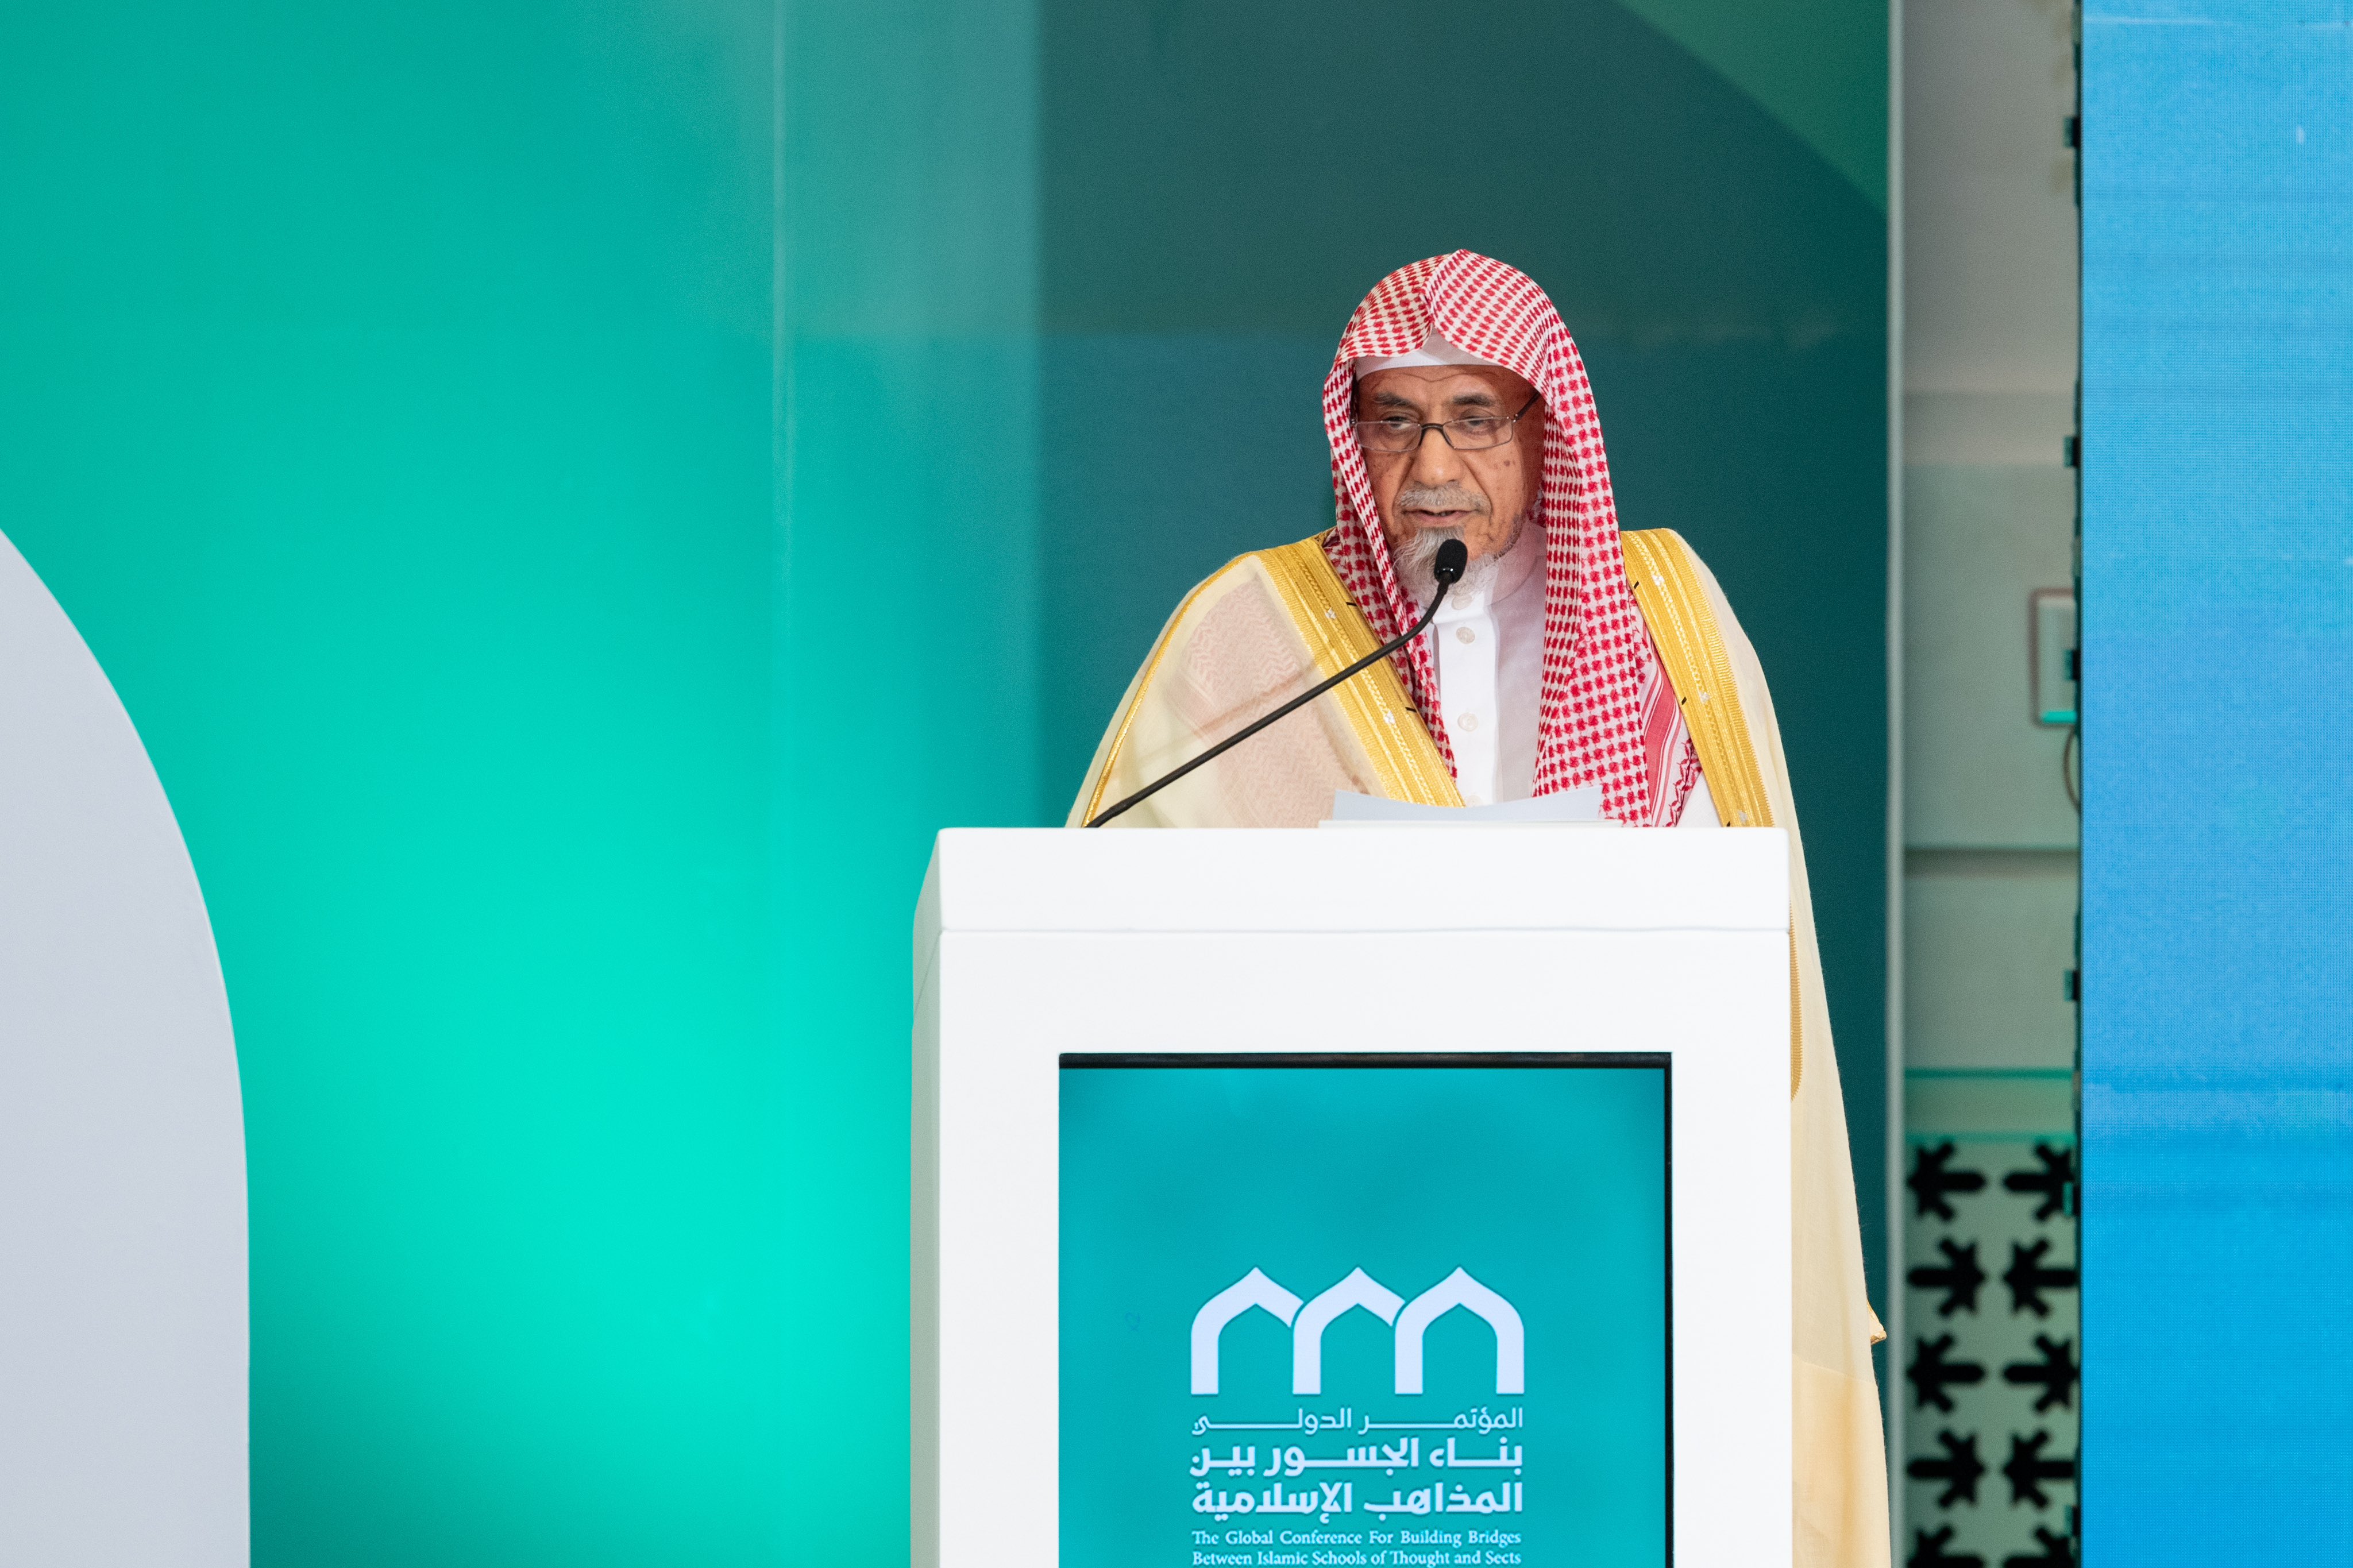 Yang Mulia Syekh Dr. Saleh bin Abdullah bin Humaid, Penasihat di Dewan Kerajaan, Imam dan Khatib Masjidil Haram serta Anggota Dewan Ulama Senior, dalam pidatonya pada sesi penutupan konferensi: “Membangun Jembatan Antar Mazhab Islam”: